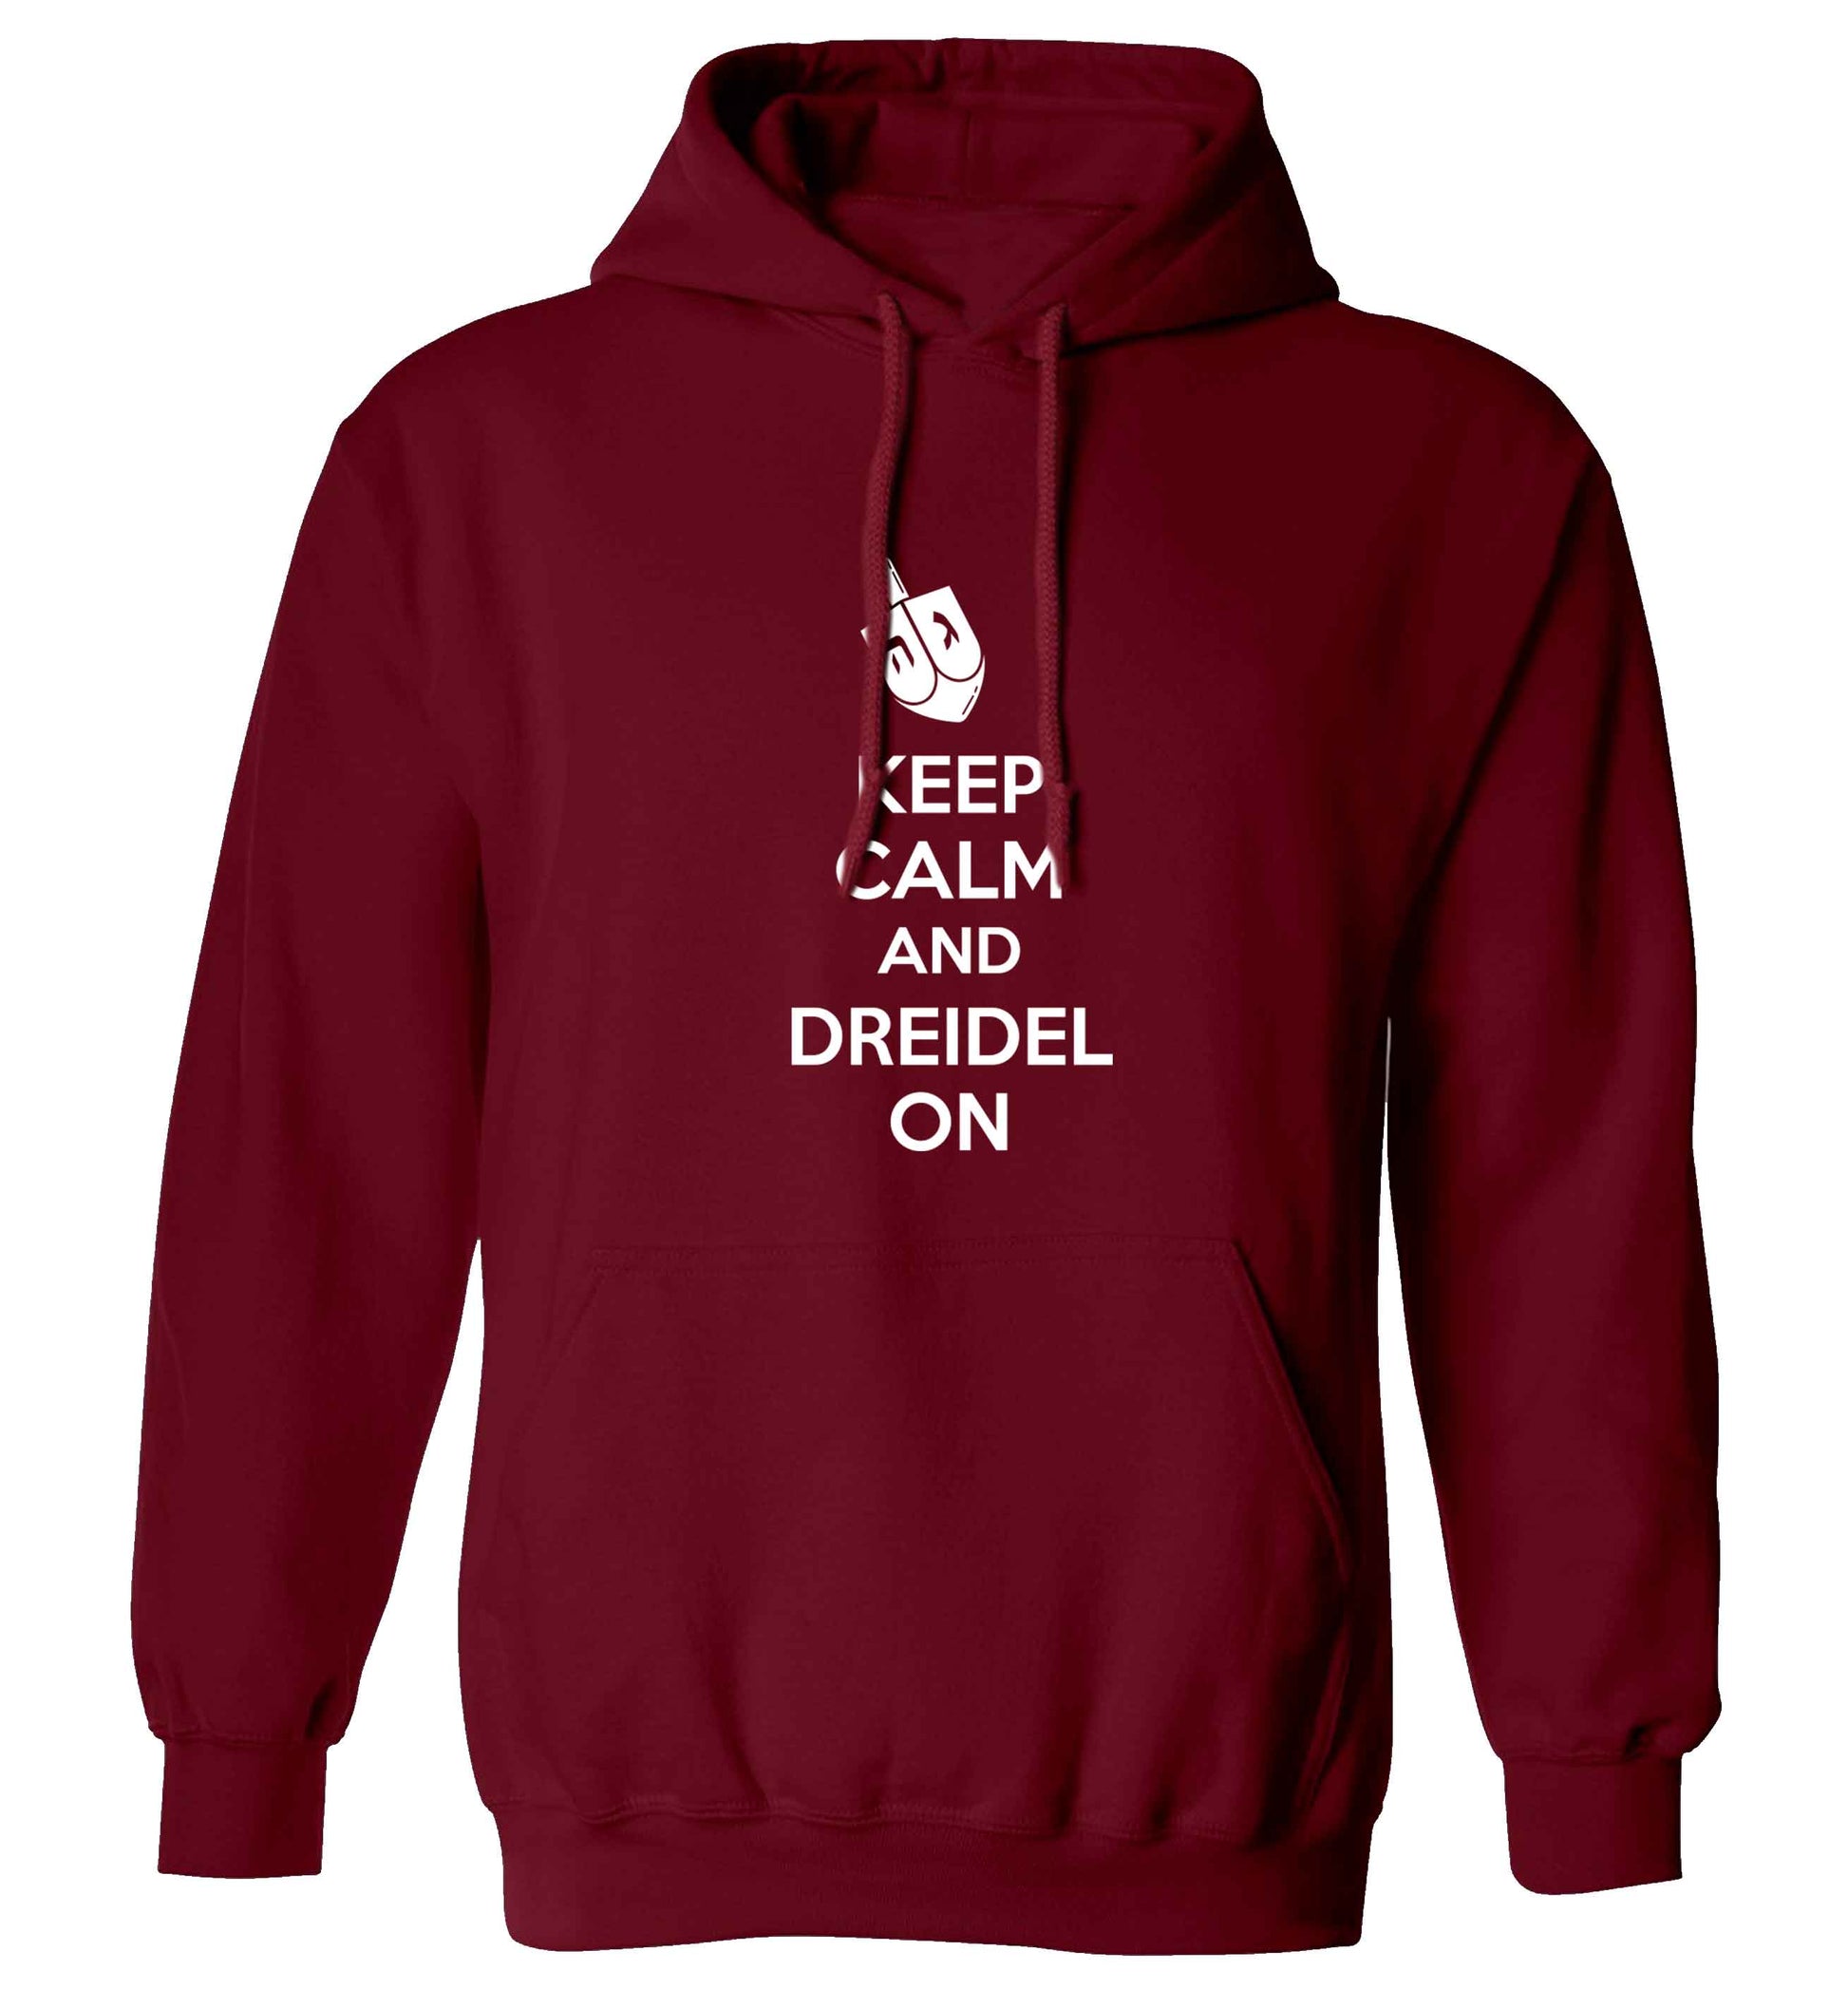 Keep calm and dreidel on adults unisex maroon hoodie 2XL